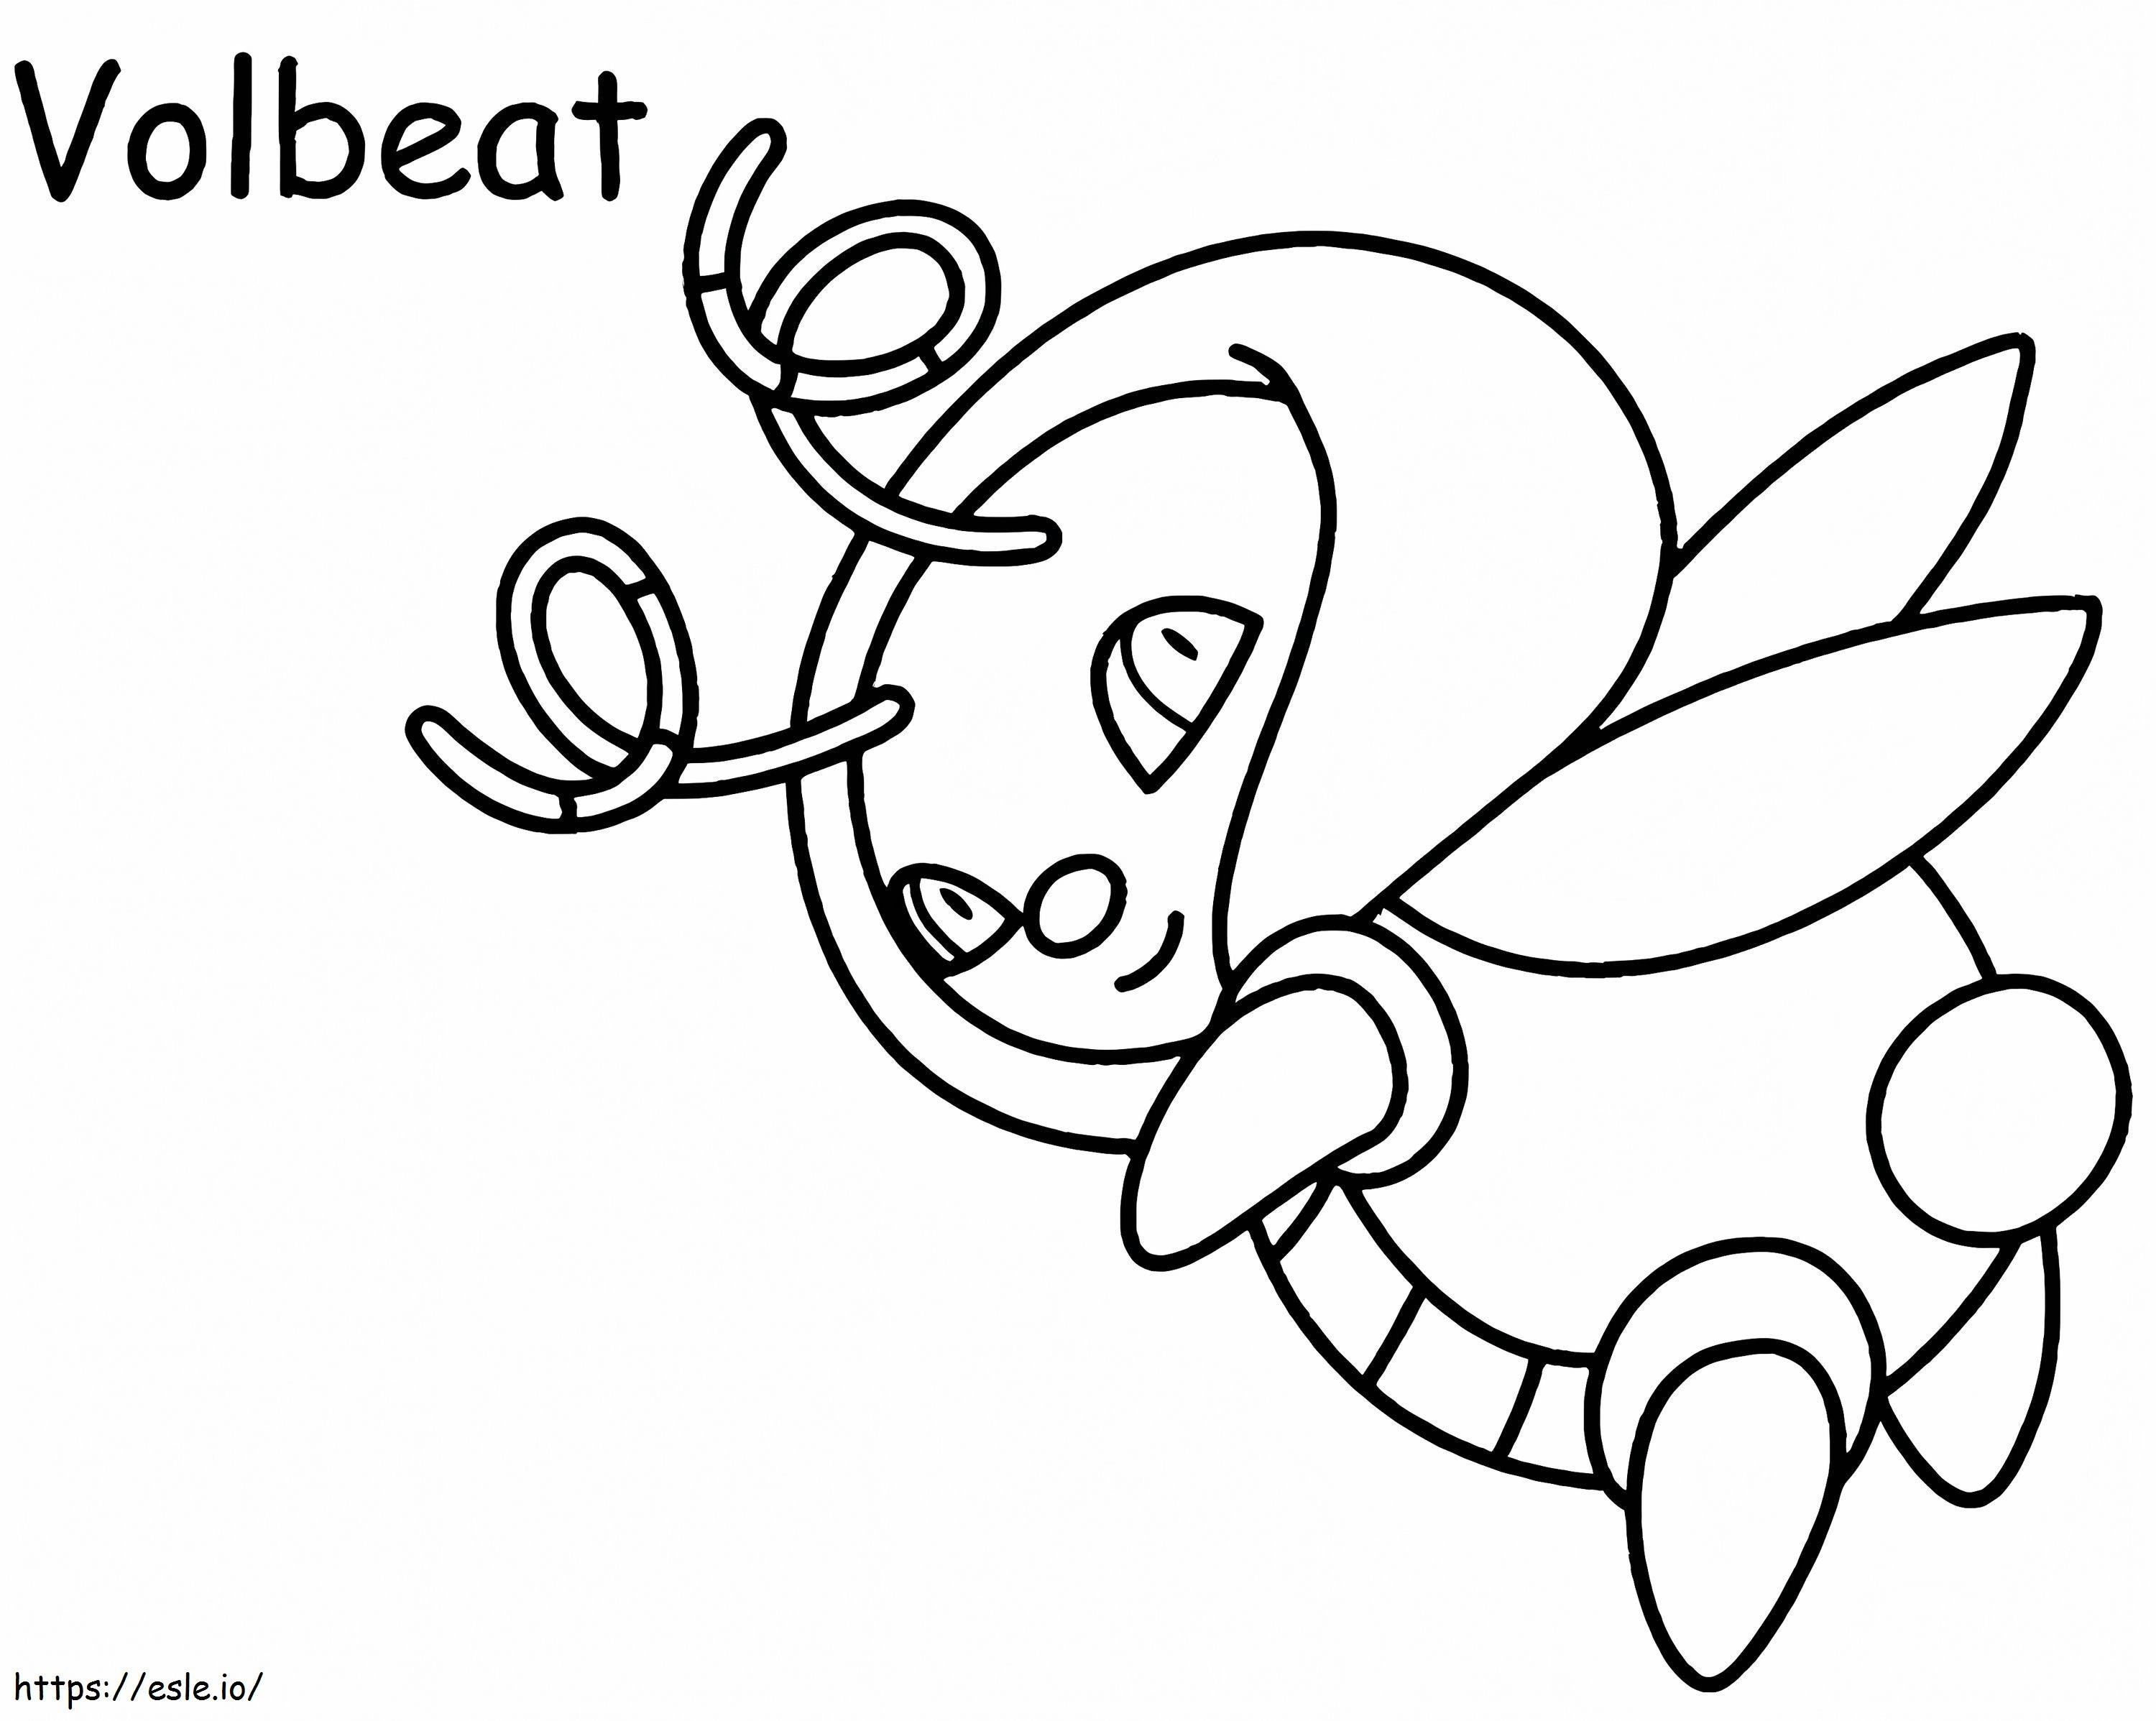 Druckbares Volbeat-Pokémon ausmalbilder